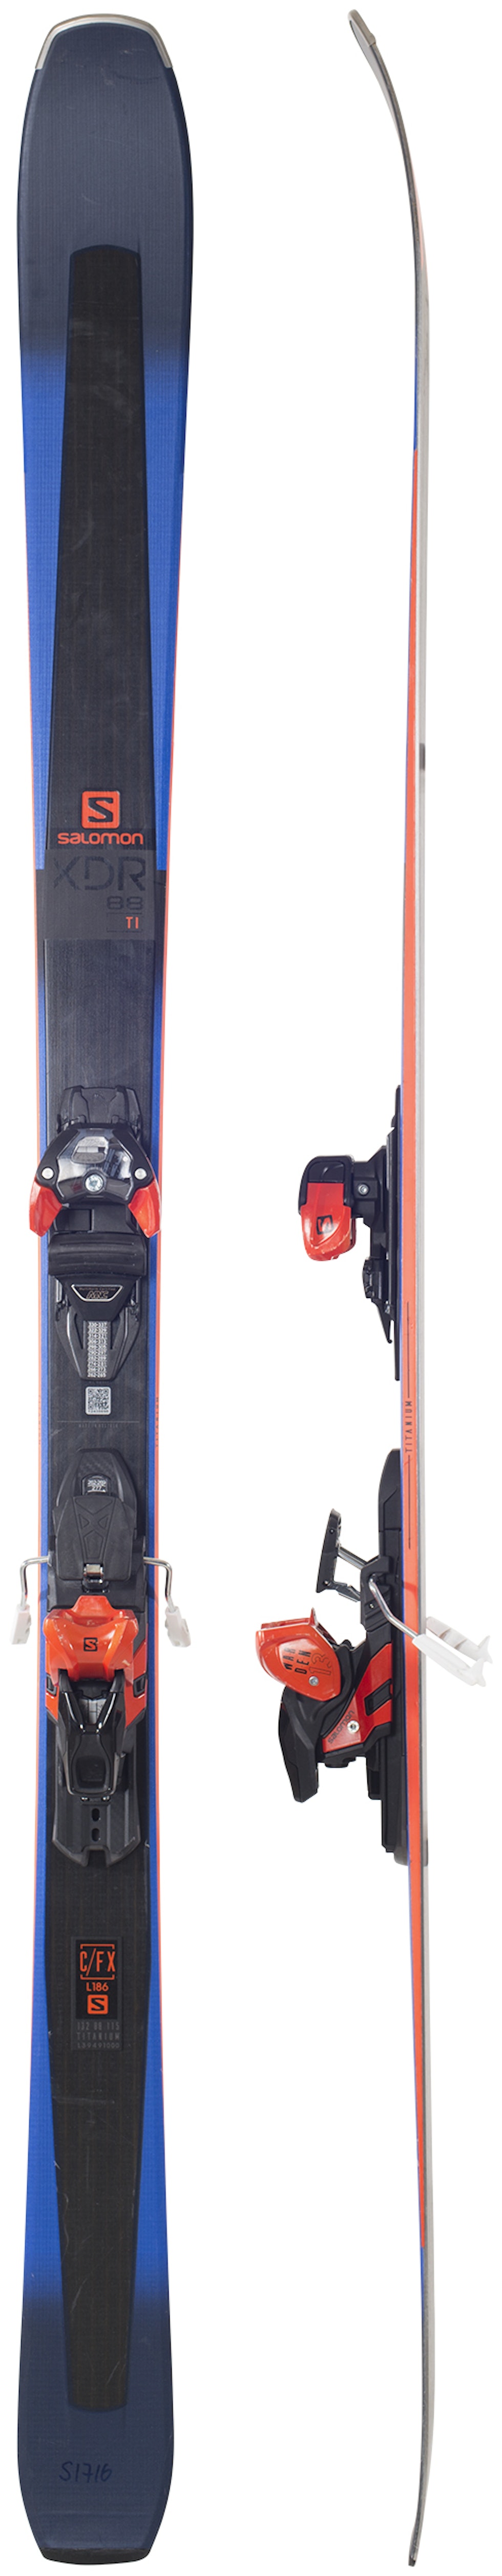 Calendario Licuar Presentador Test av ski Salomon XDR 88 TI 2018 | Carving ski | FRIFLYT.NO